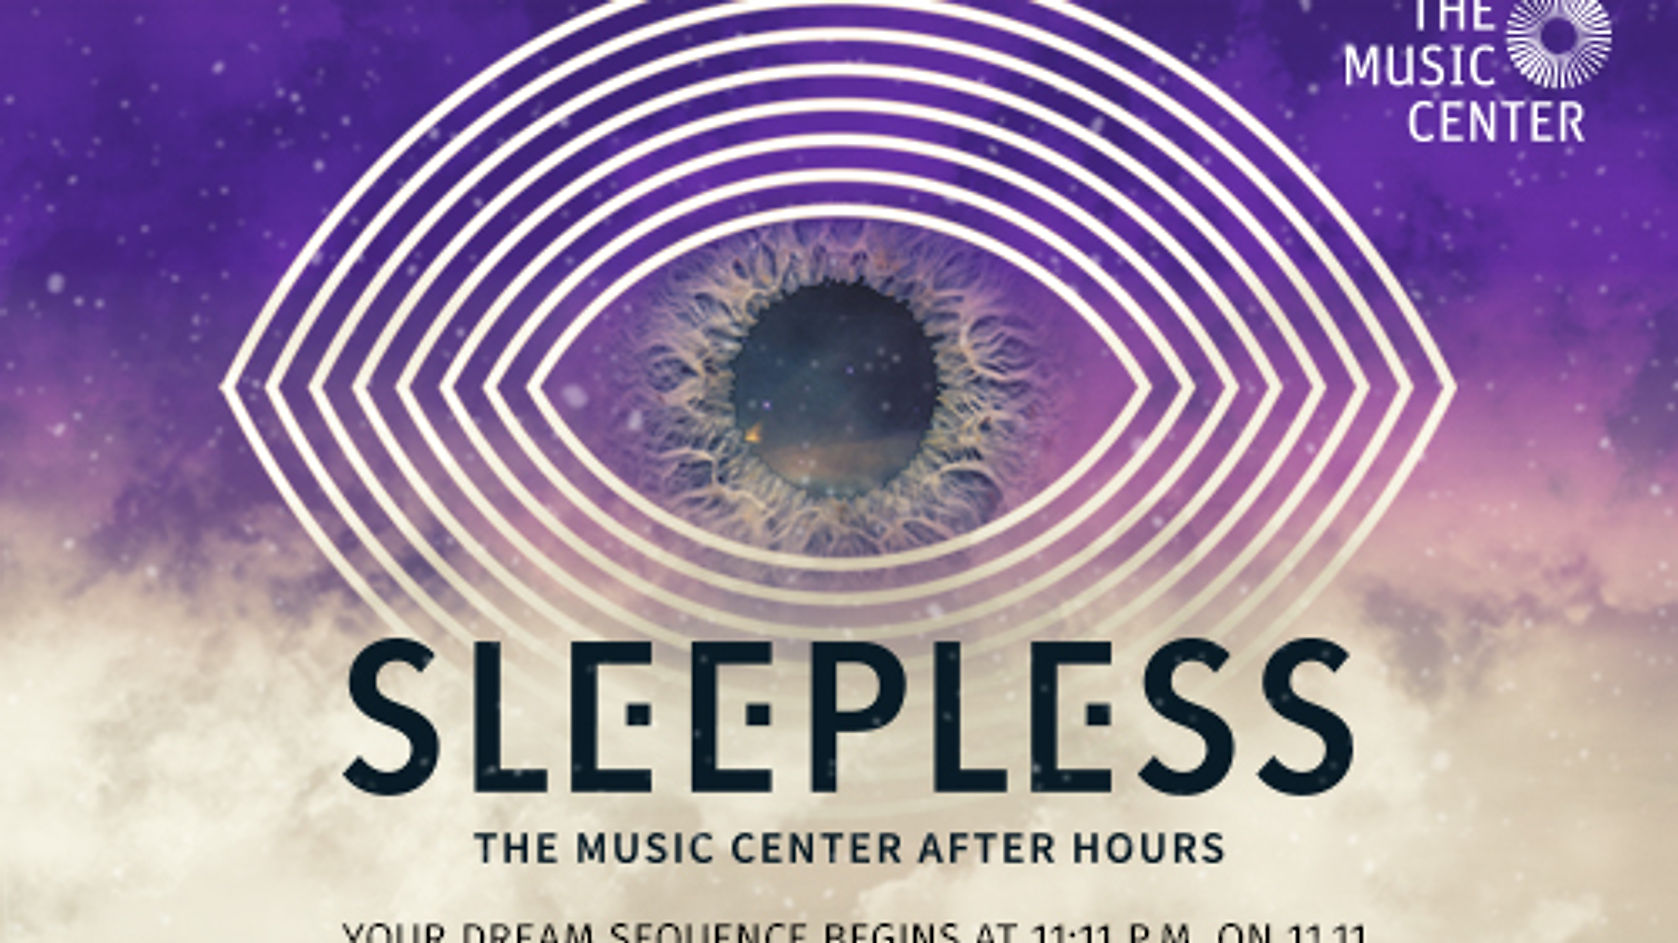 Music Center • Sleepless: The Music Center After Hours